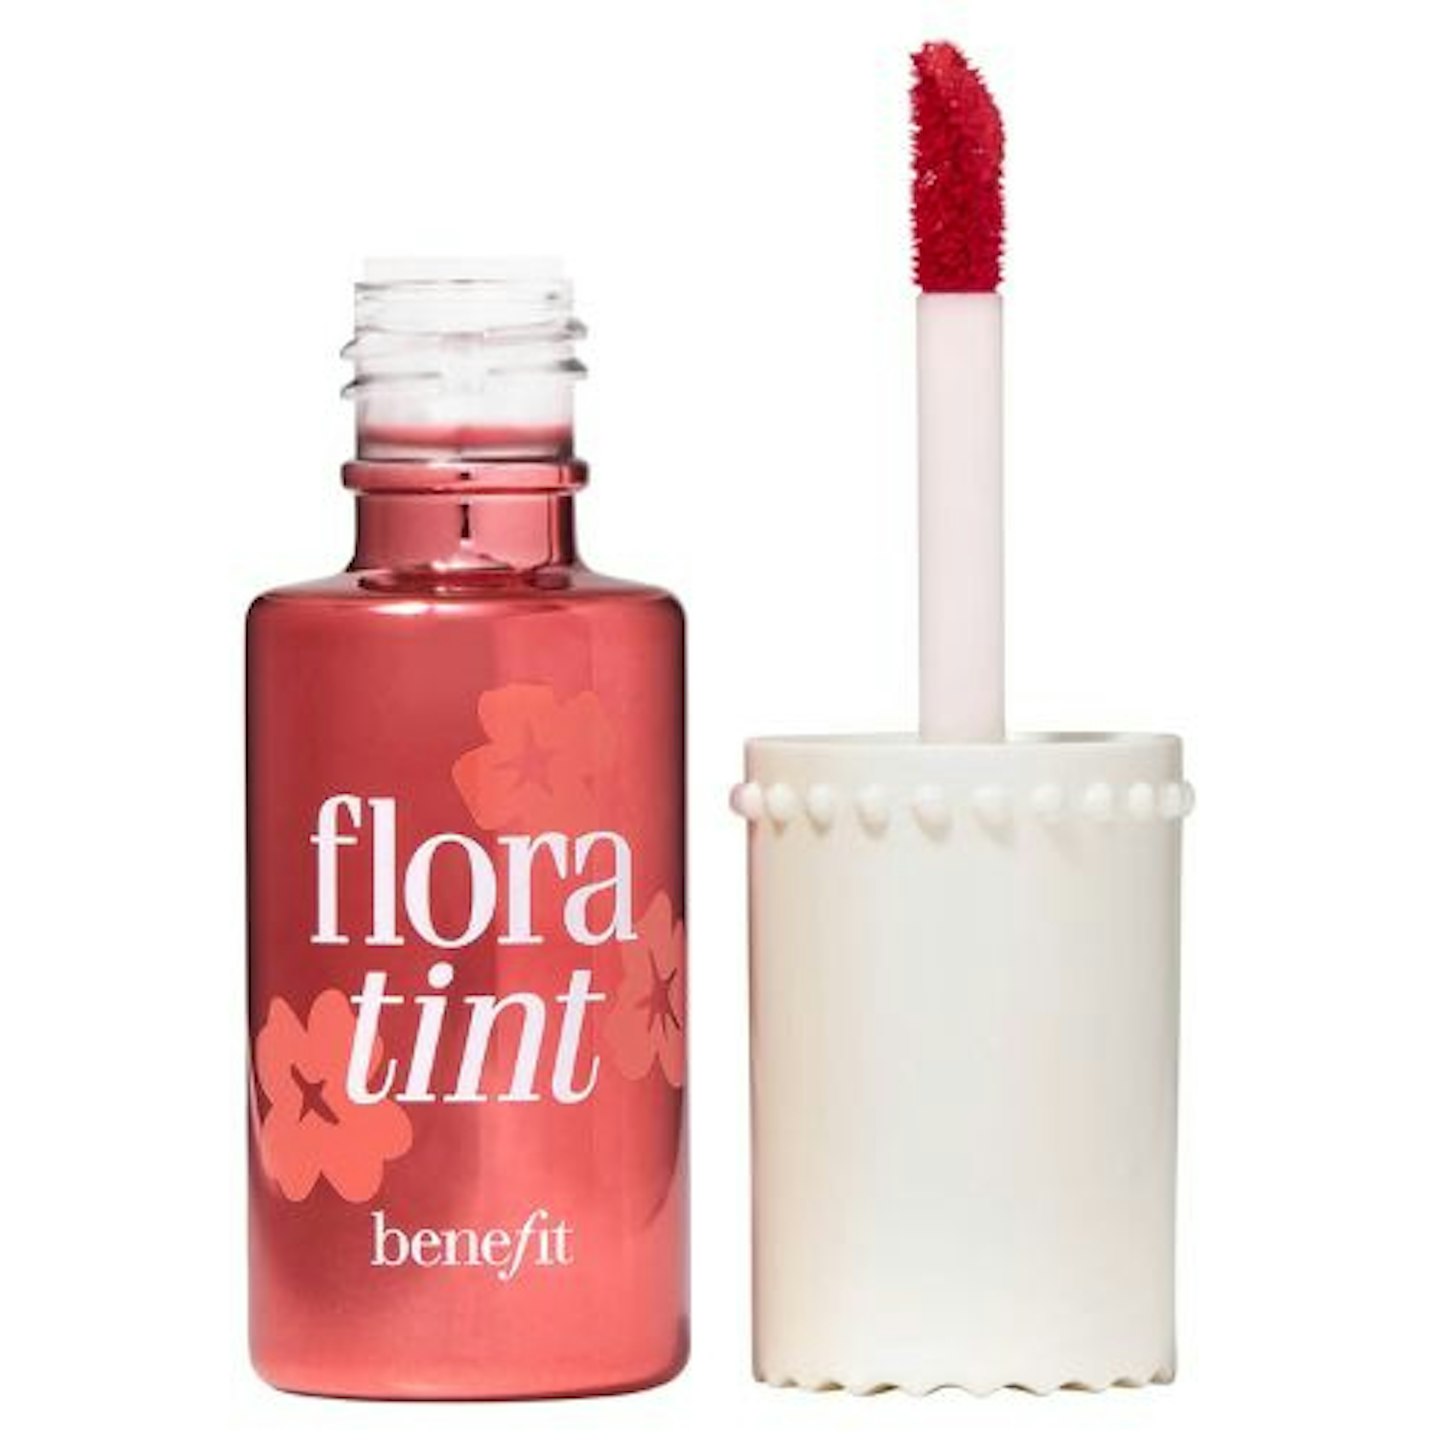 benefit Floratint Desert Rose-Tinted Lip and Cheek Tint